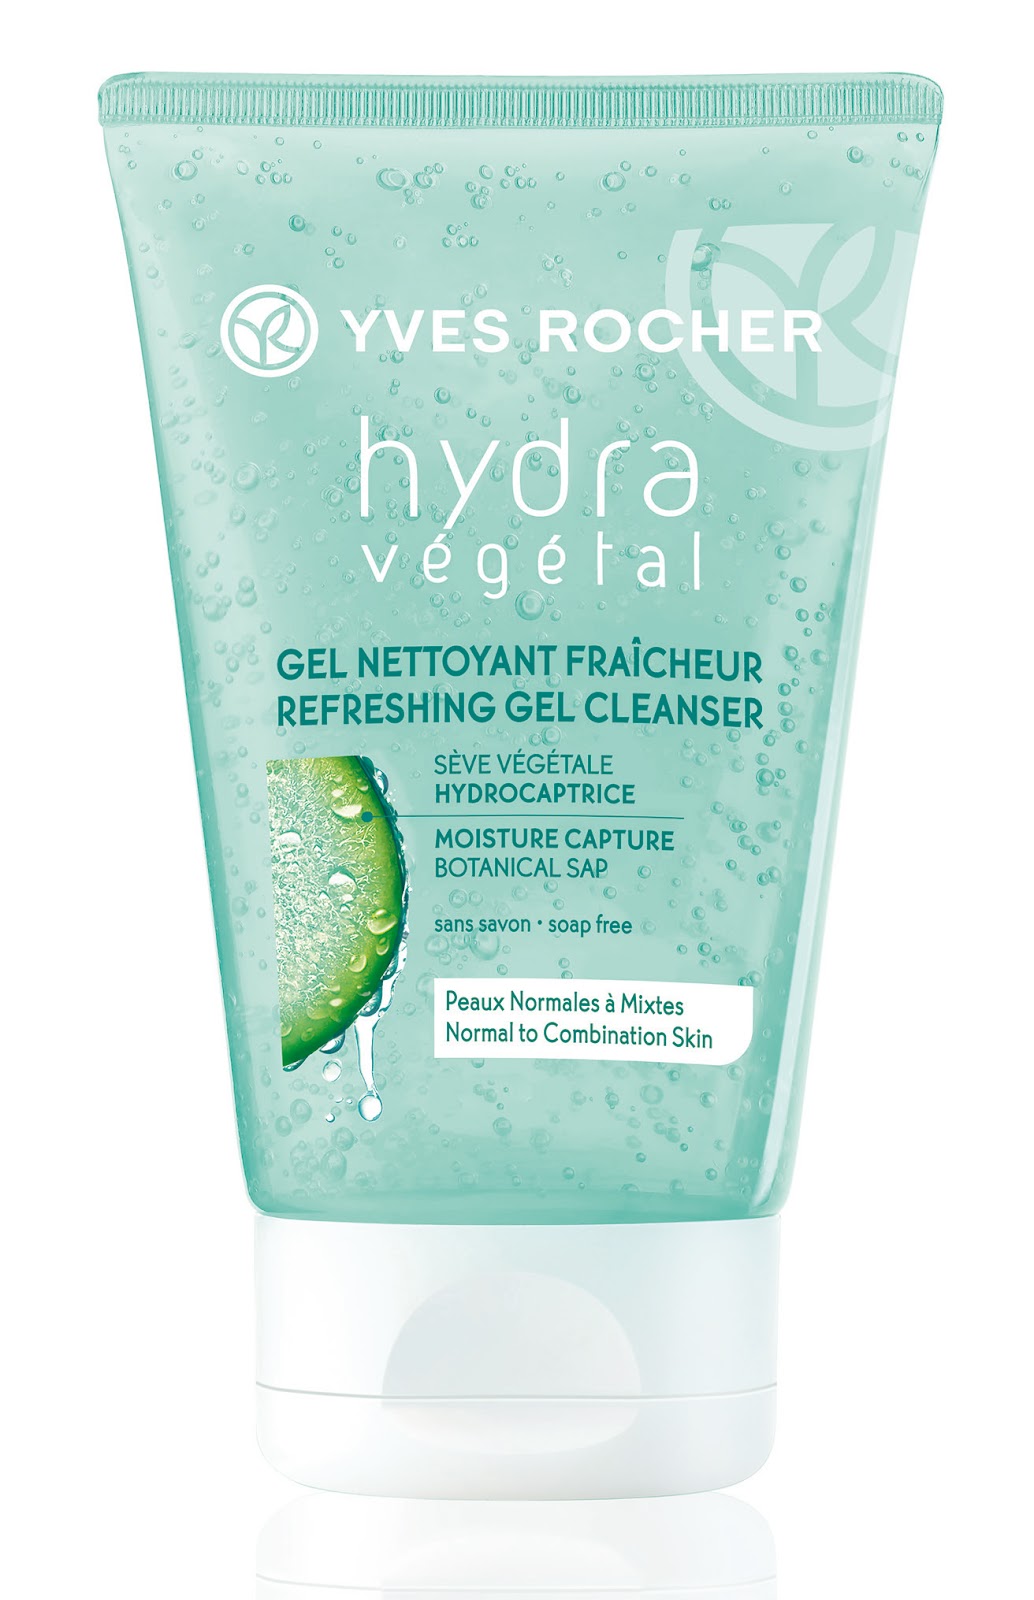 Hydra vegetal Yves Rocher гель nettoyant. Yves Rocher Cleansing Gel. Ив Роше пенка для умывания. Gel nettoyant / очищающий гель для лица.